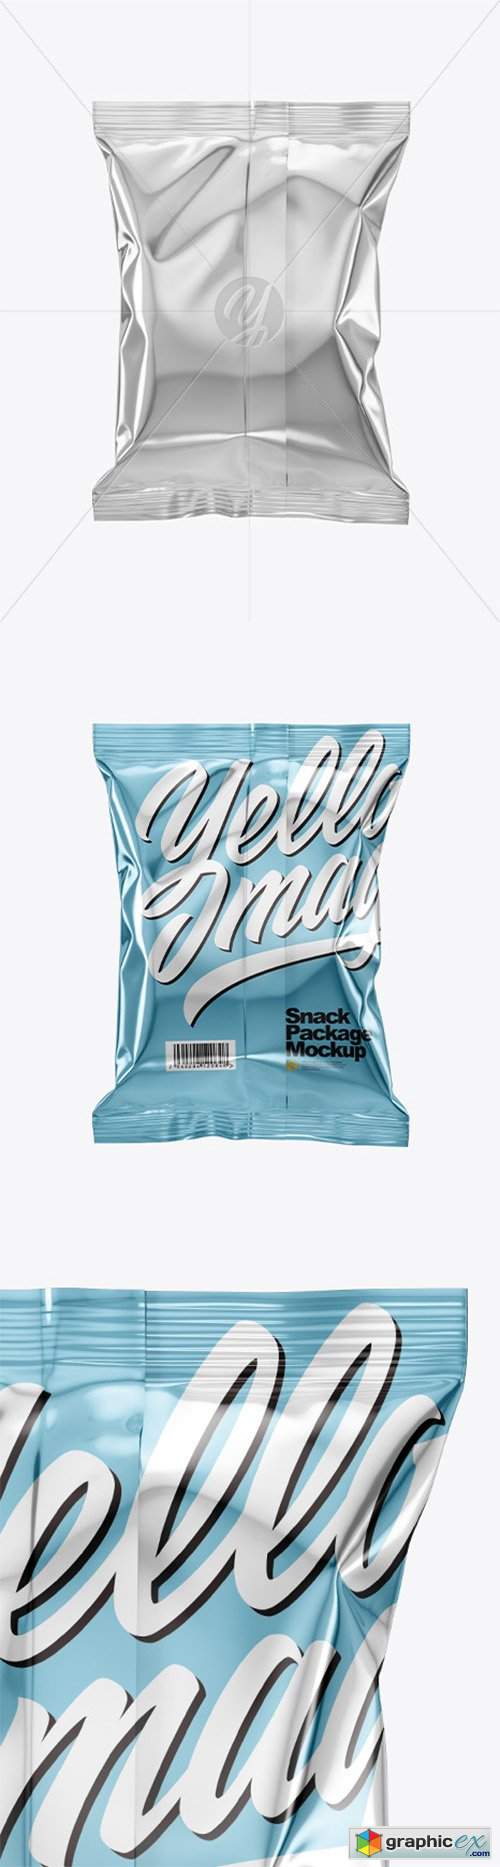  Metallic Snack Package Mockup - Back View 